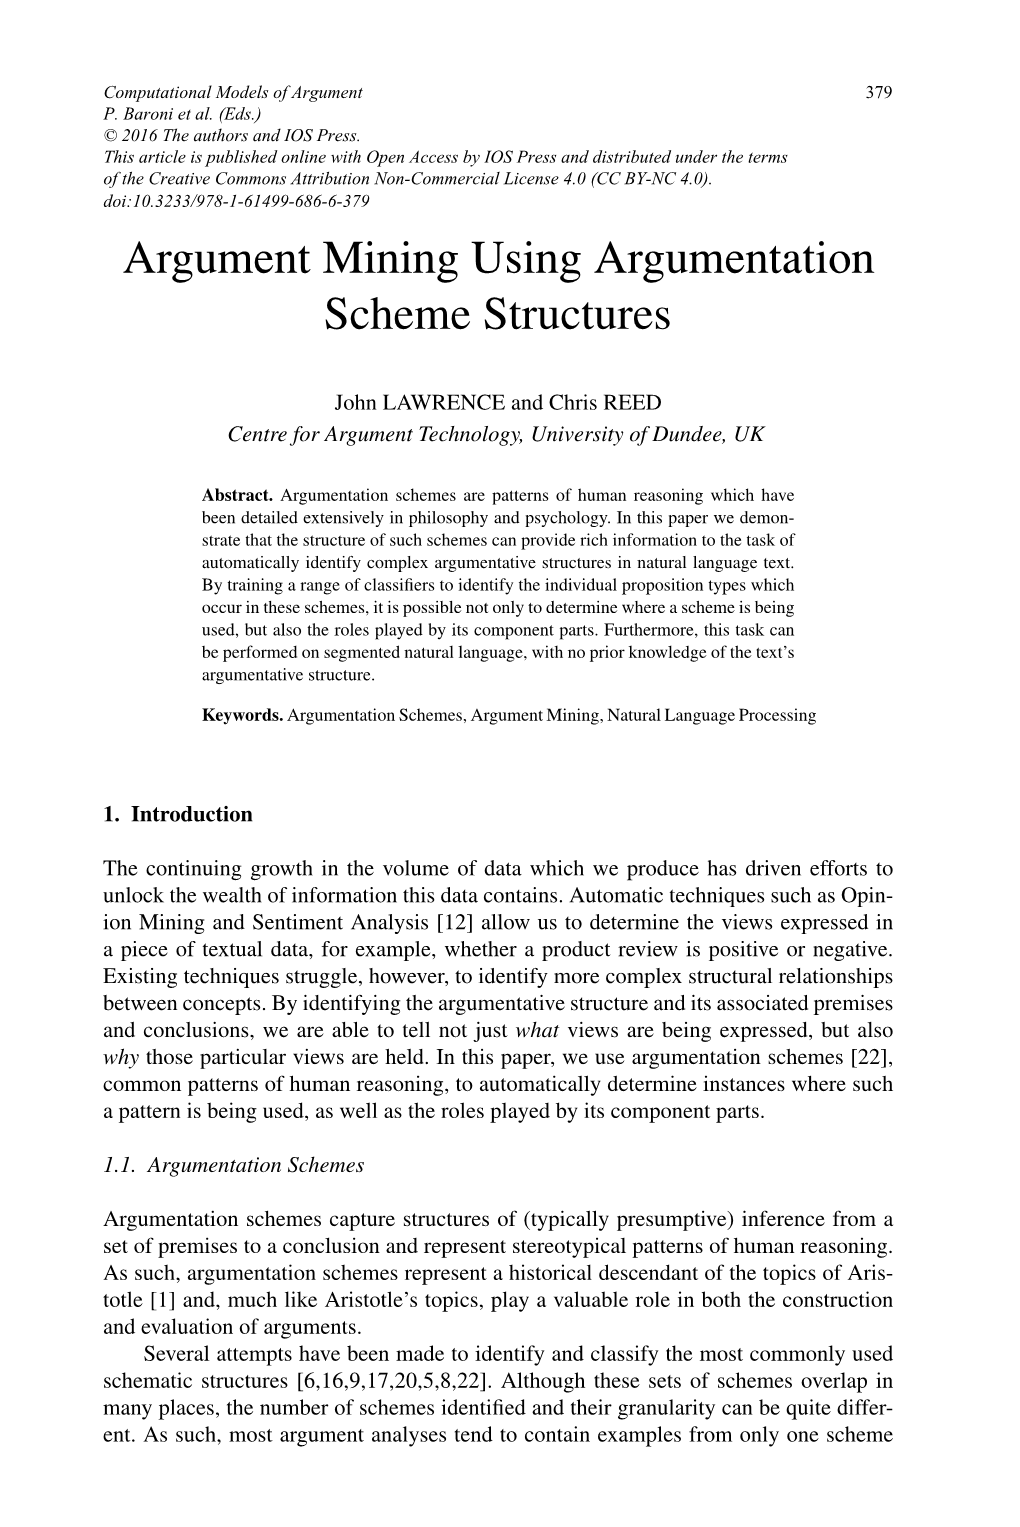 Argument Mining Using Argumentation Scheme Structures